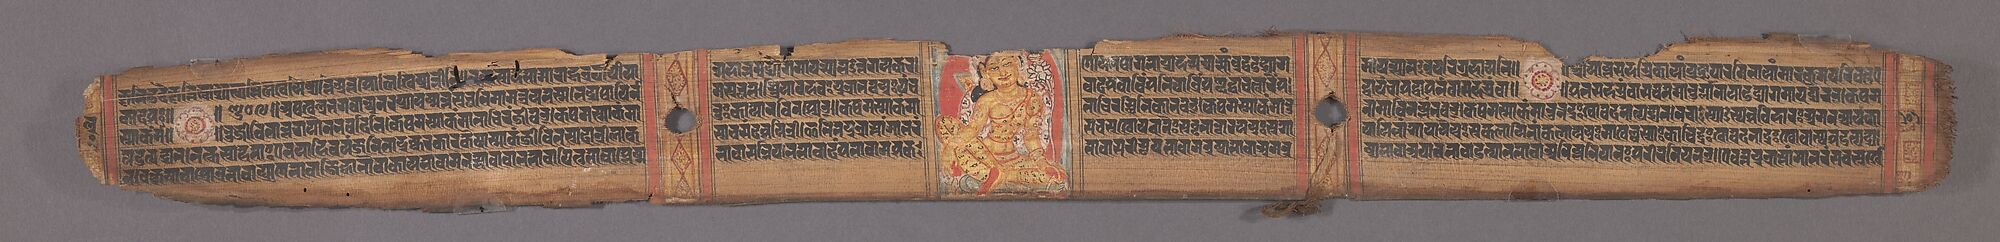 White Tara, Leaf from a dispersed Ashtasahasrika Prajnaparamita (Perfection of Wisdom) Manuscript